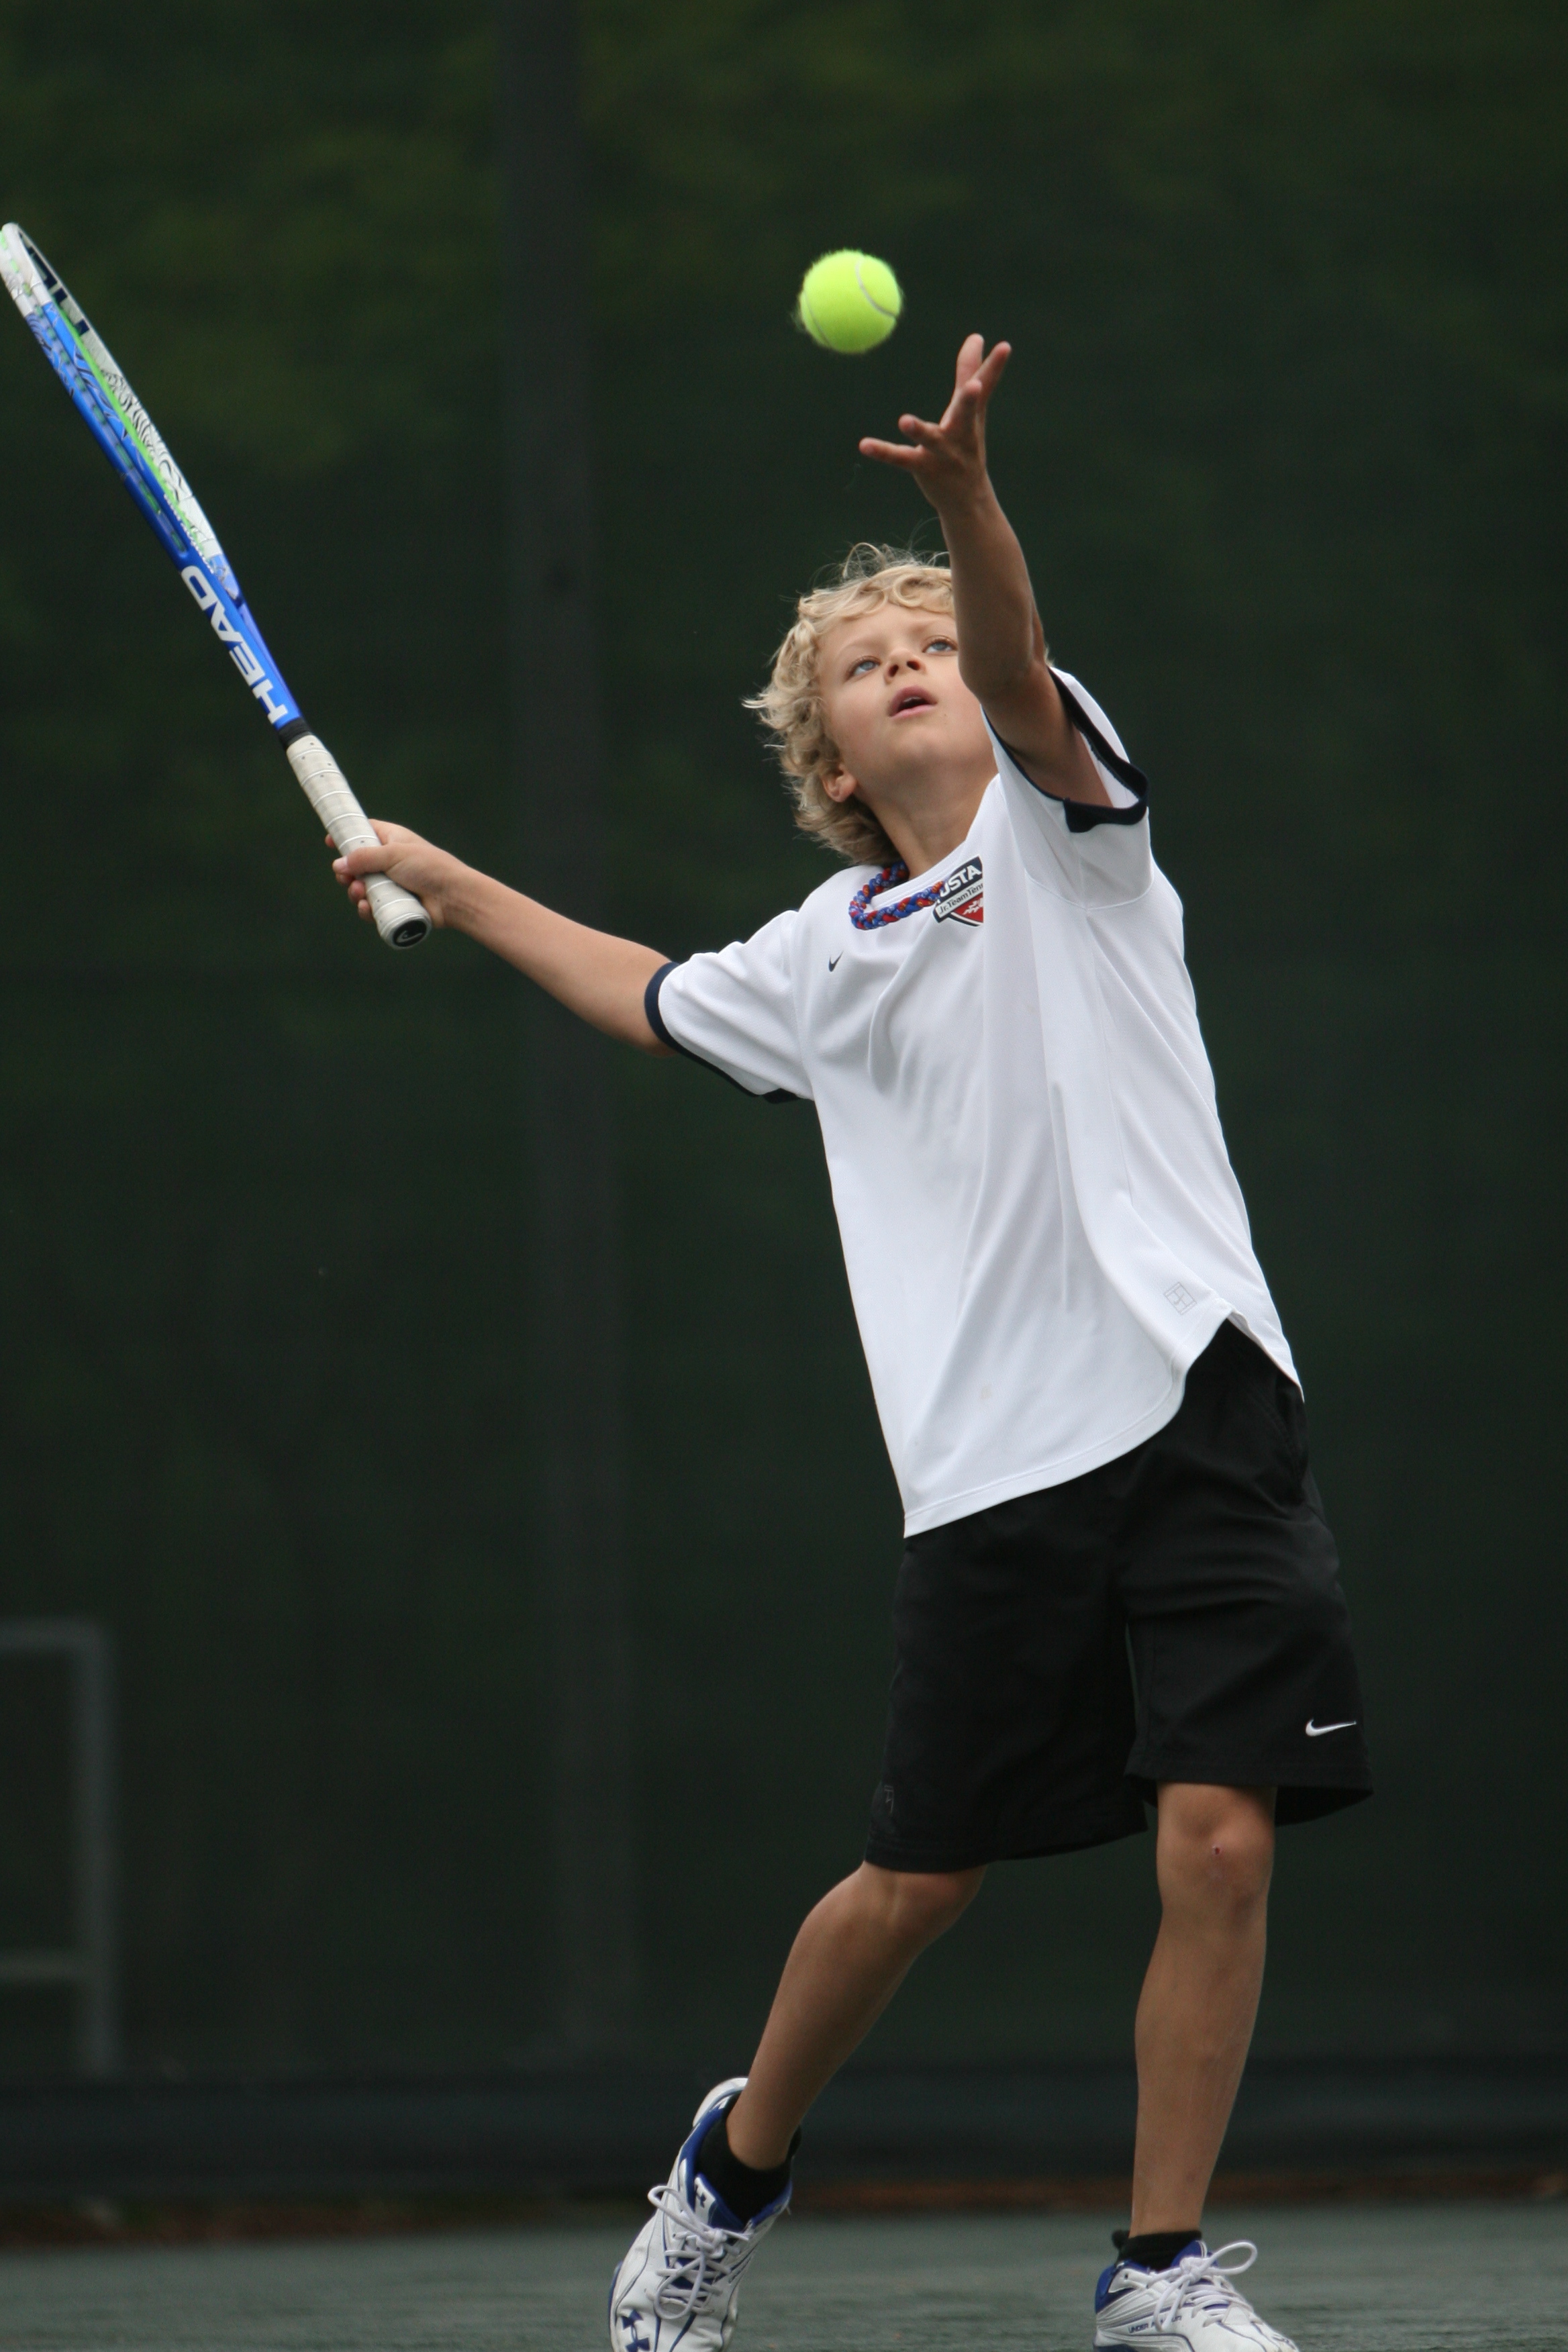 Boy playing Tennis